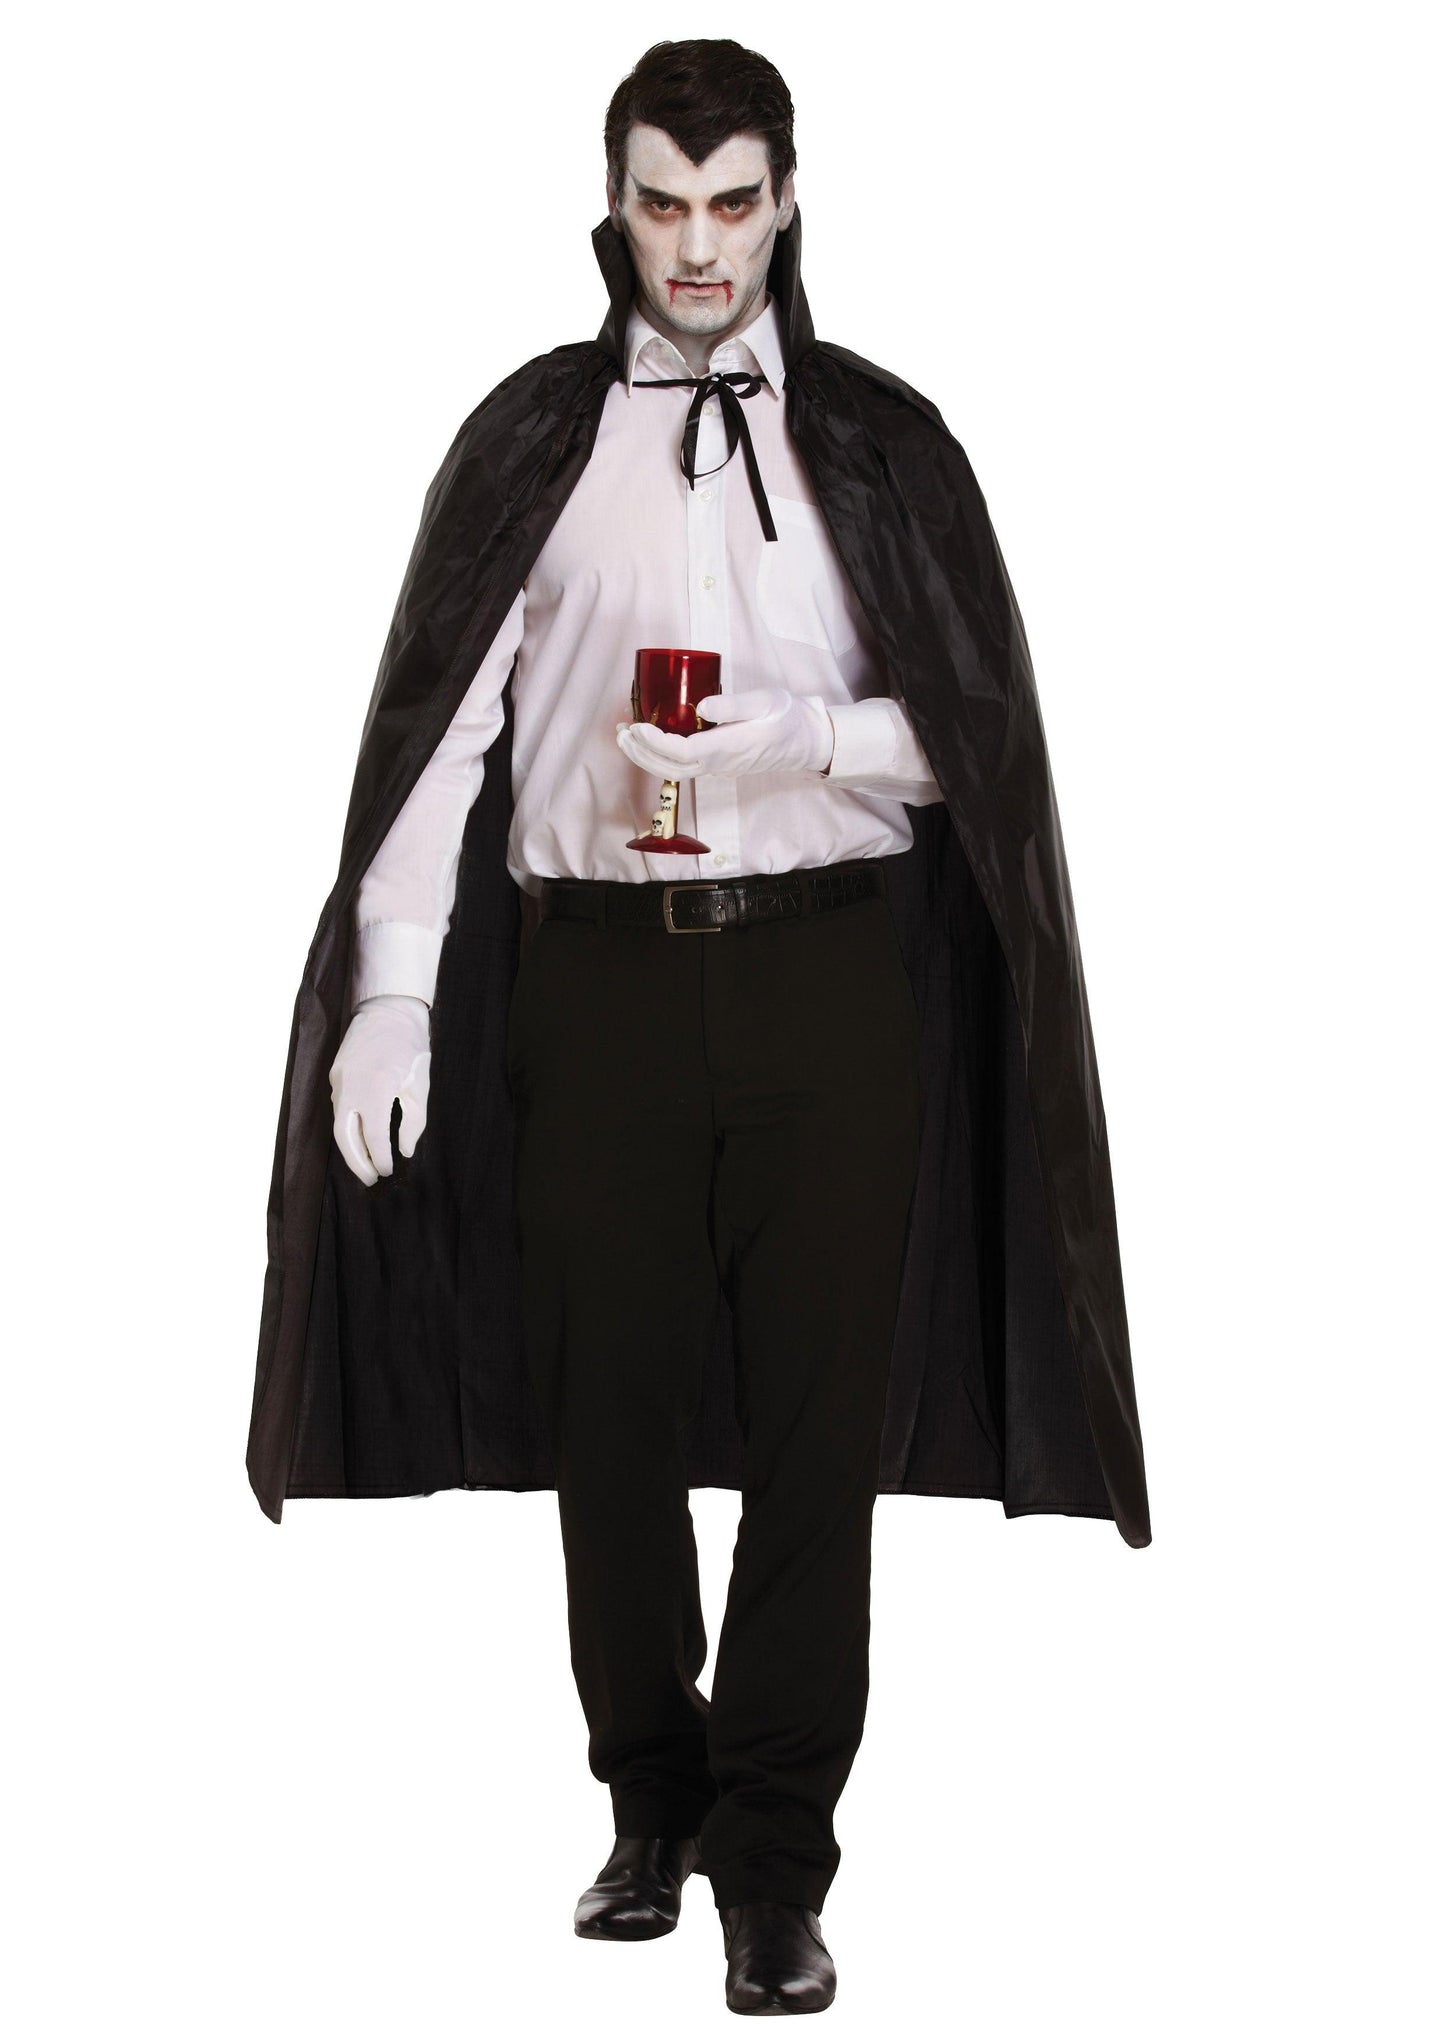 Black Long Dracula Cape with Collar Scream Bleeding Mask Plastic Reaper Scythe 110 Cm Halloween Scary Dracula Costume - Labreeze